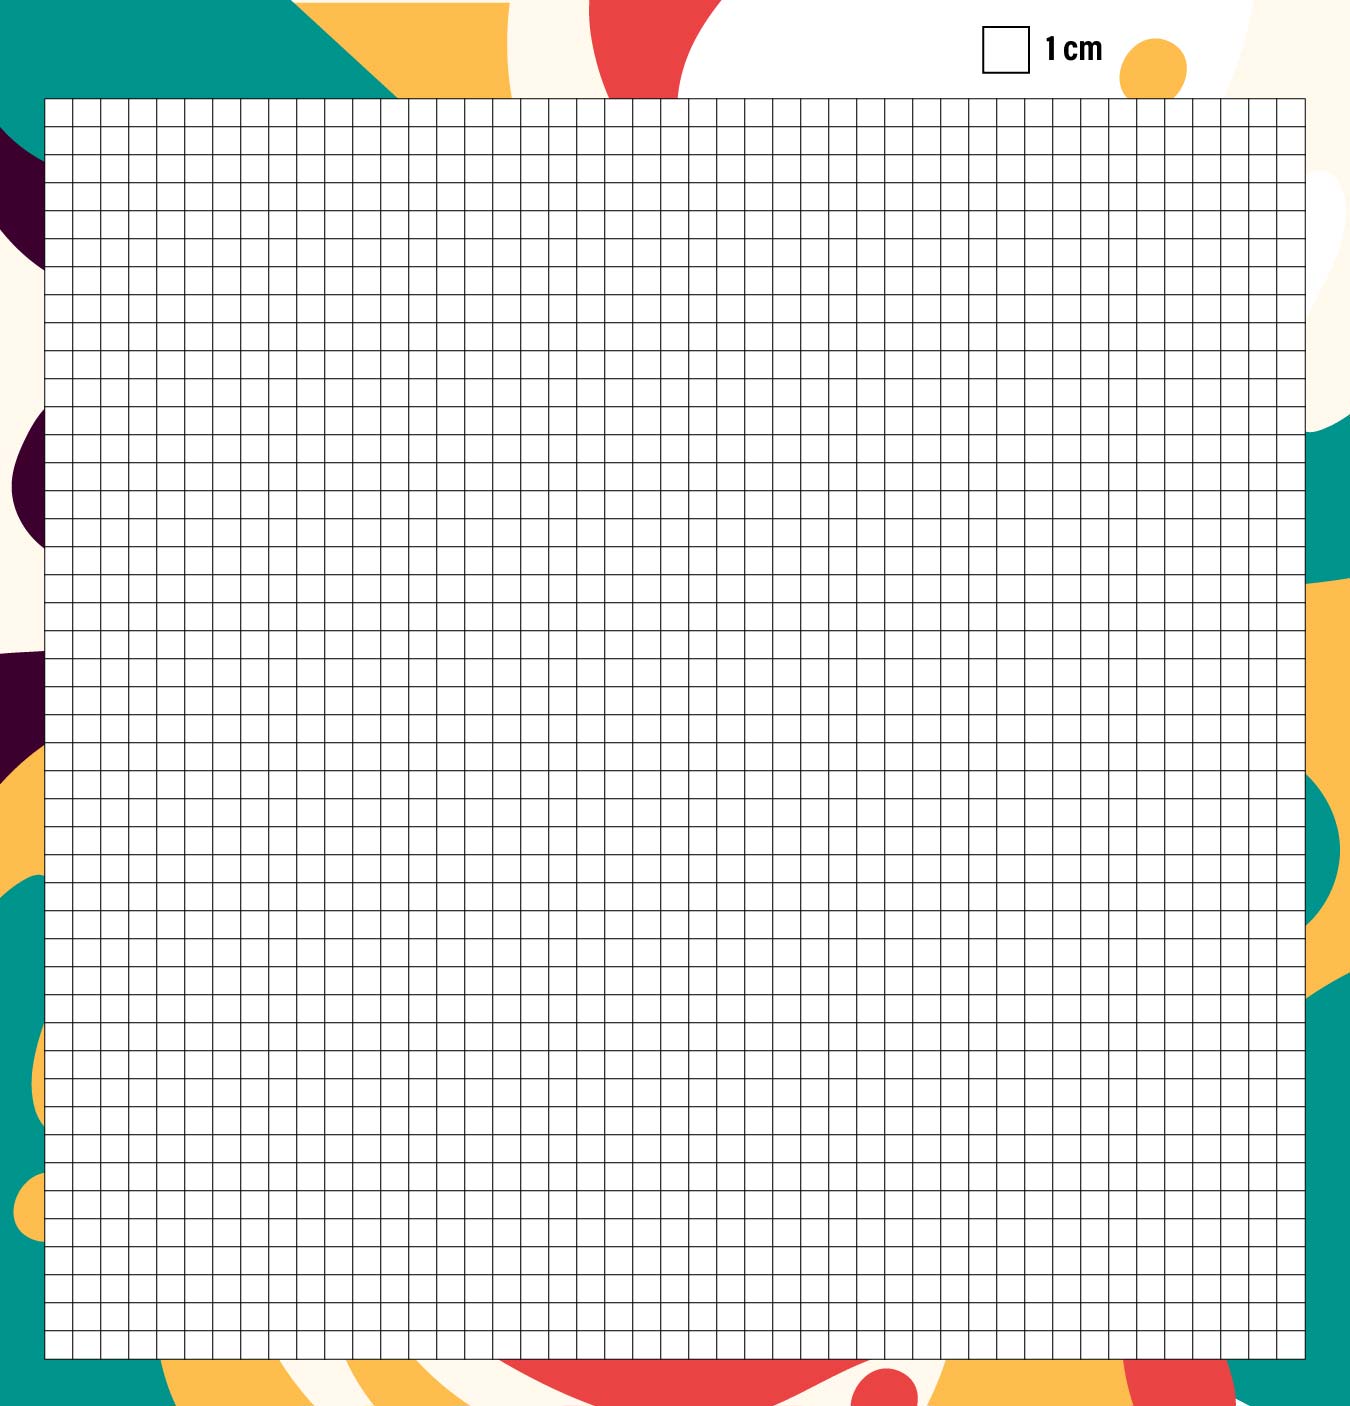 Printable Grid Paper 1cm